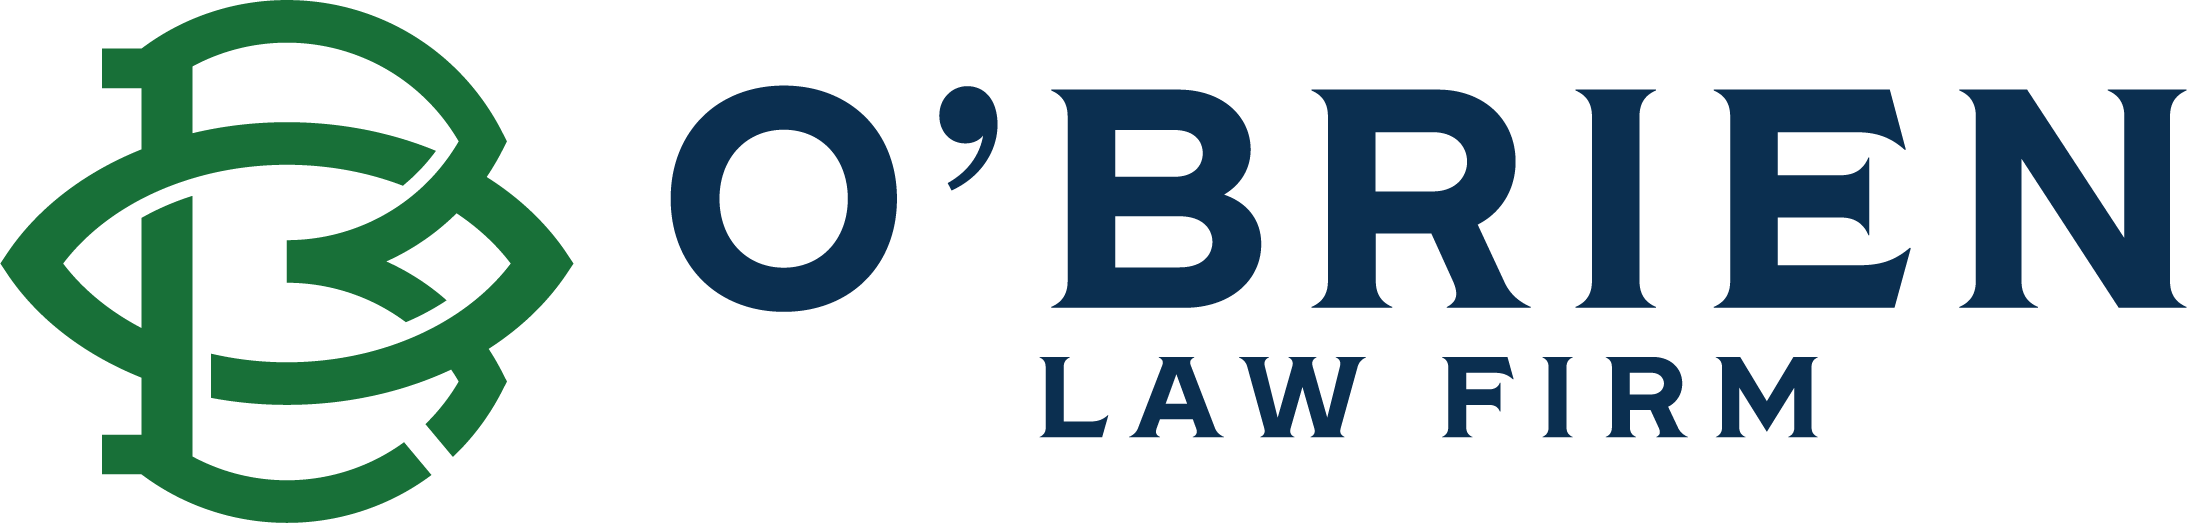 obrien law firm logo